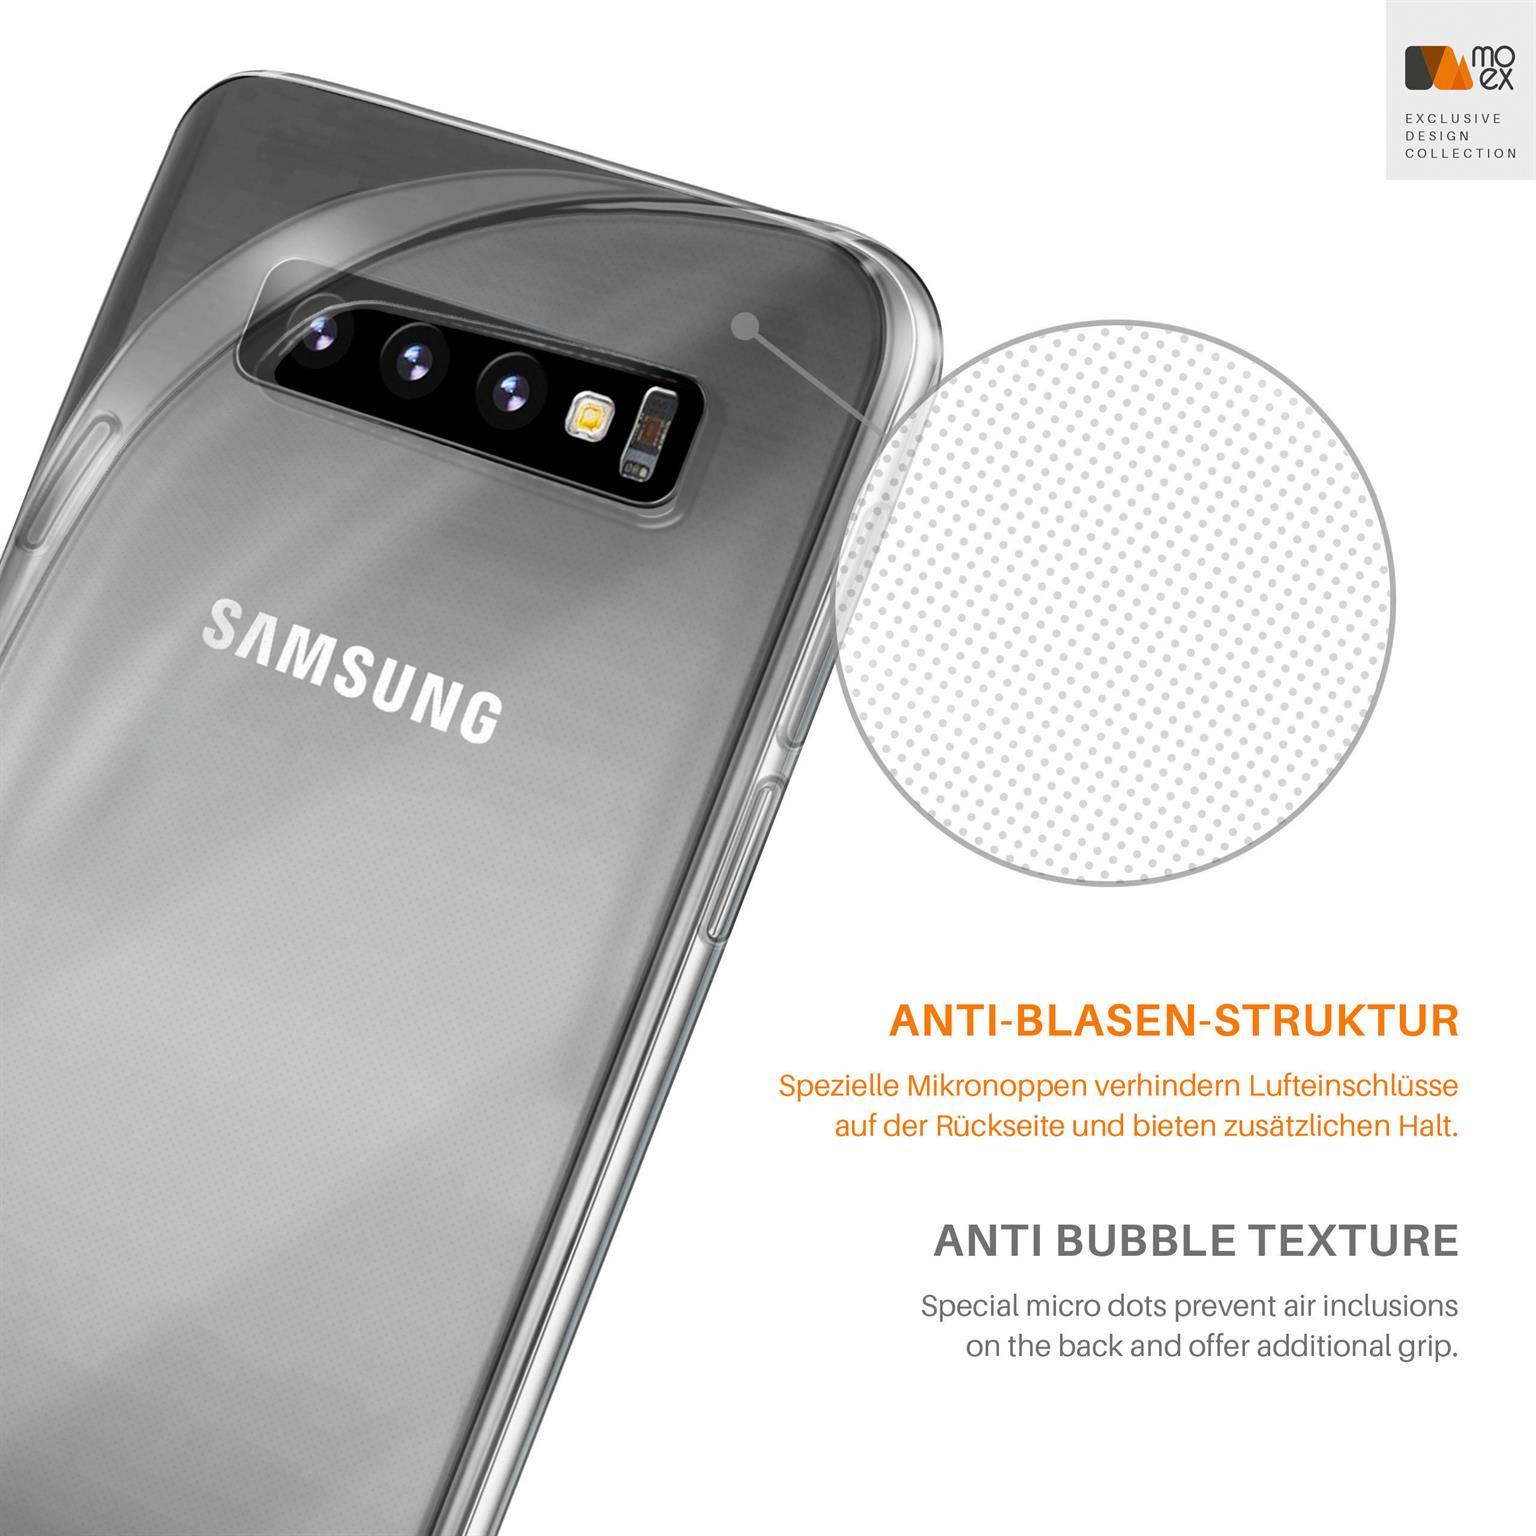 Aero S10, Crystal-Clear MOEX Case, Galaxy Backcover, Samsung,